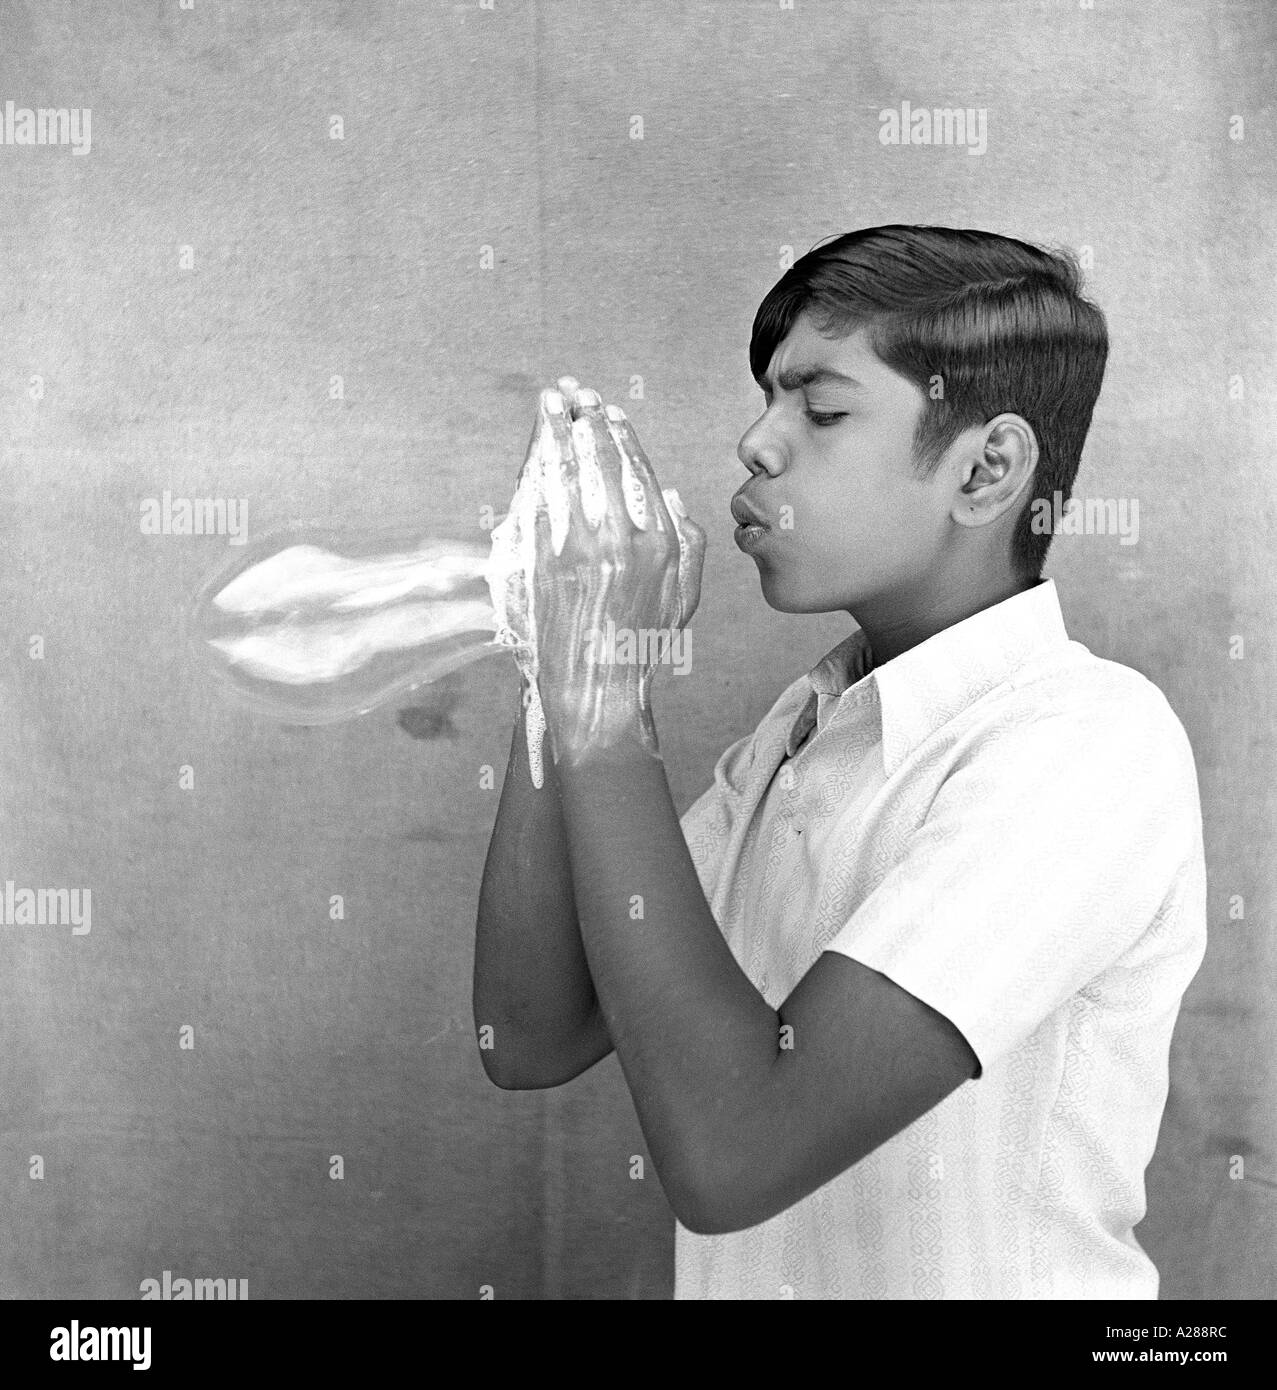 boy blowing soap balloon Stock Photo